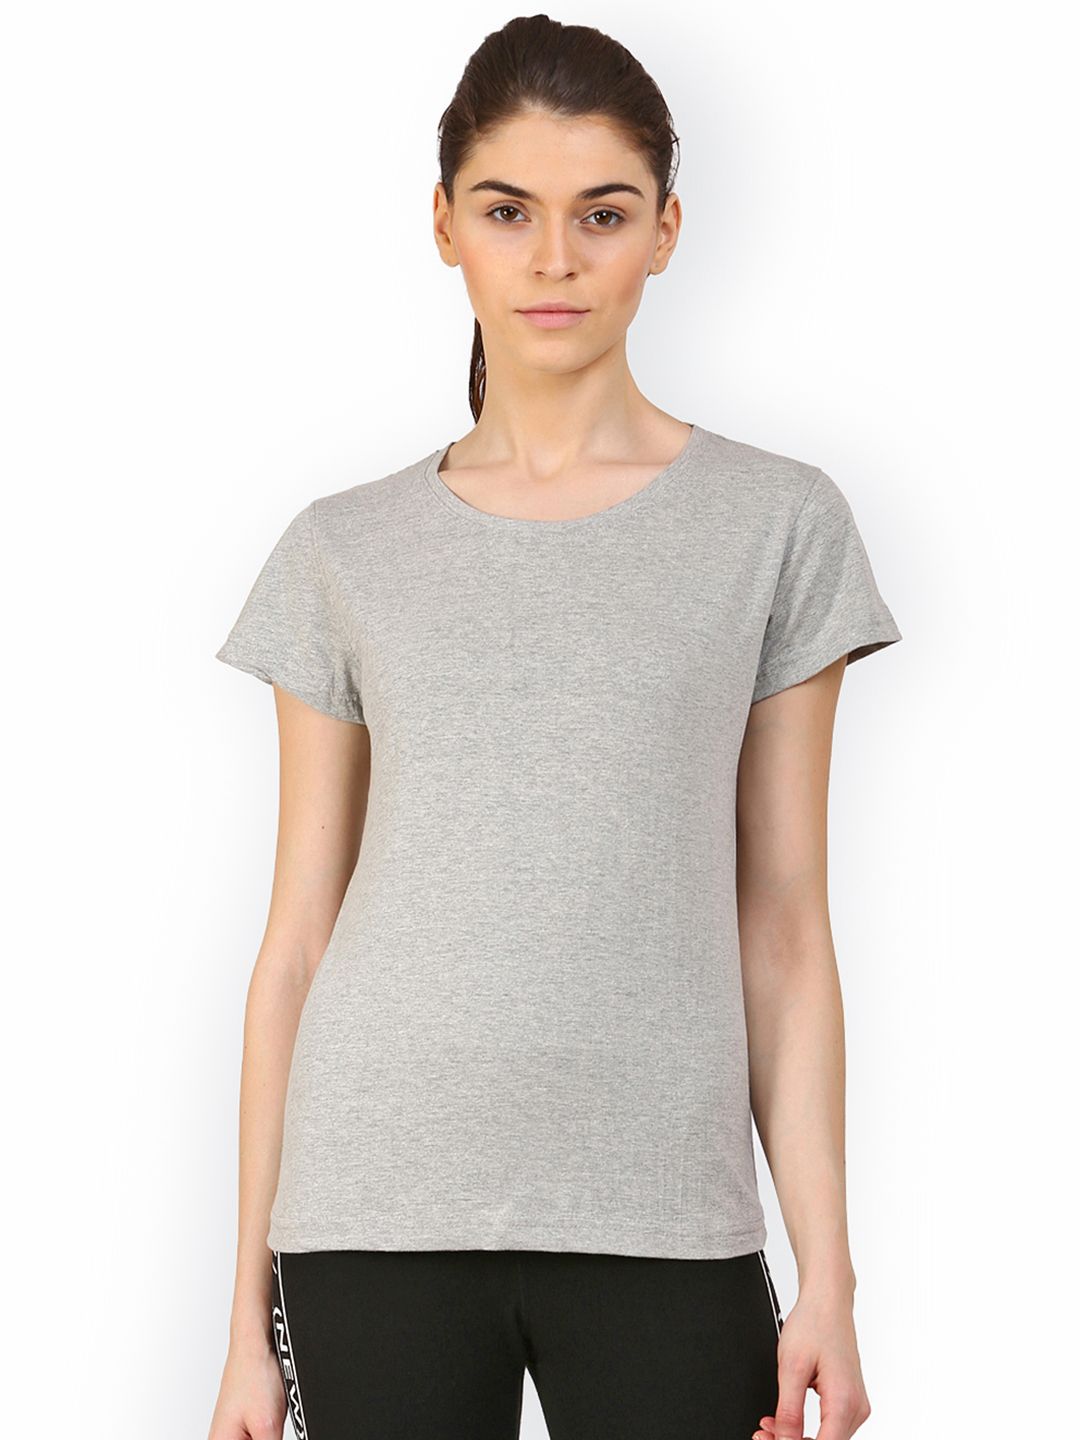 appulse Women Grey Self Design Round Neck T-shirt Price in India